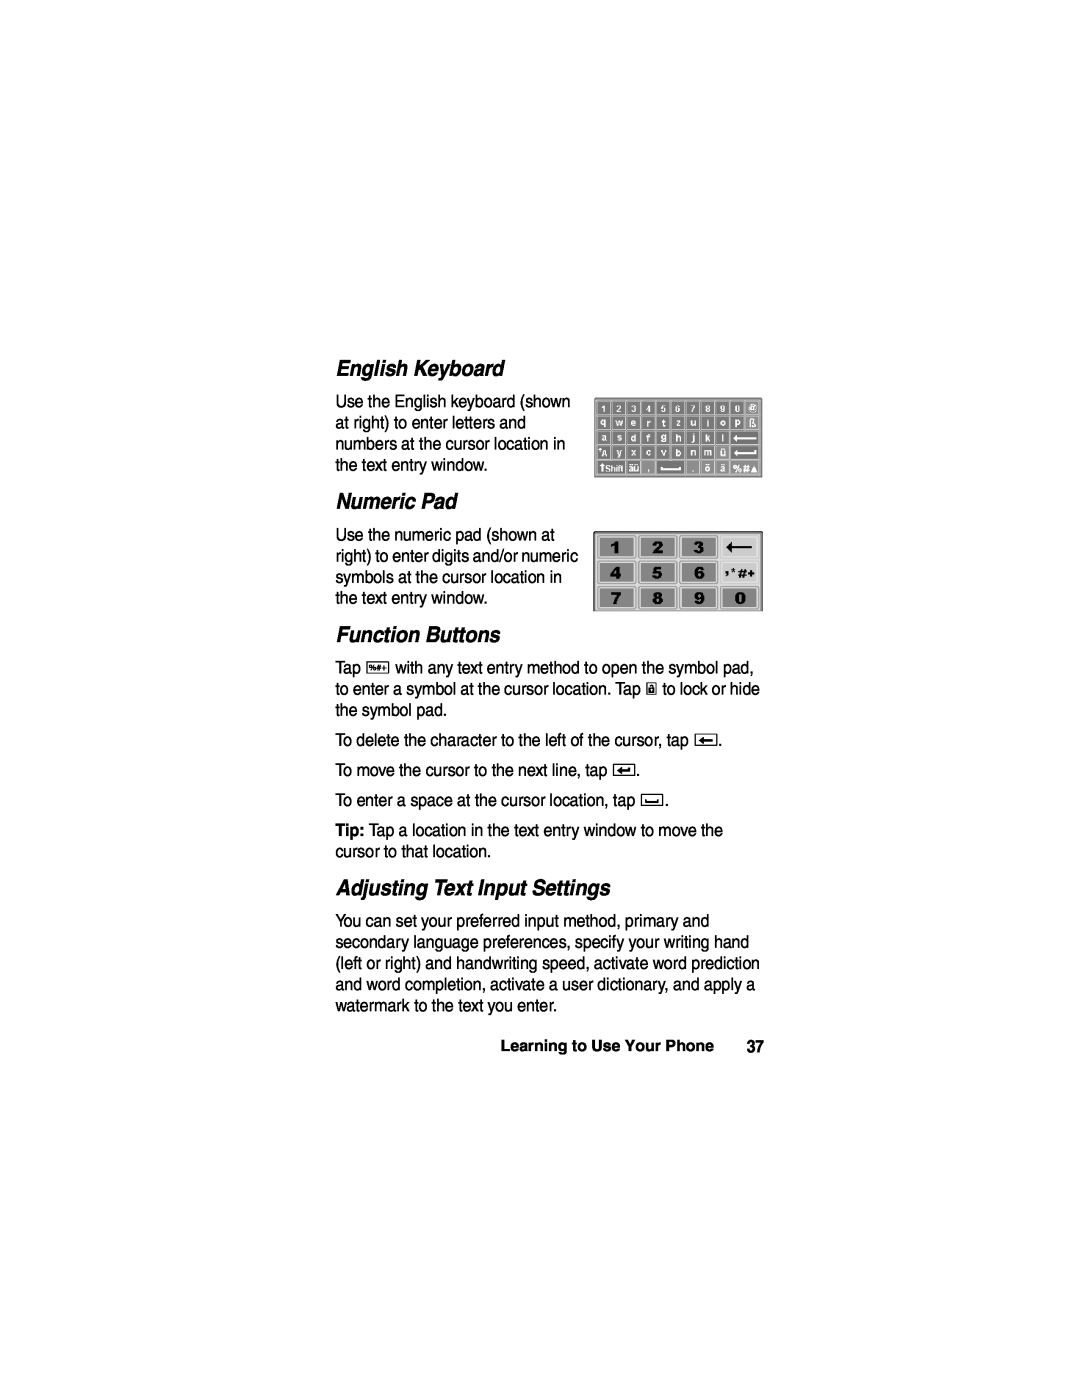 Motorola A780 manual English Keyboard, Numeric Pad, Function Buttons, Adjusting Text Input Settings 